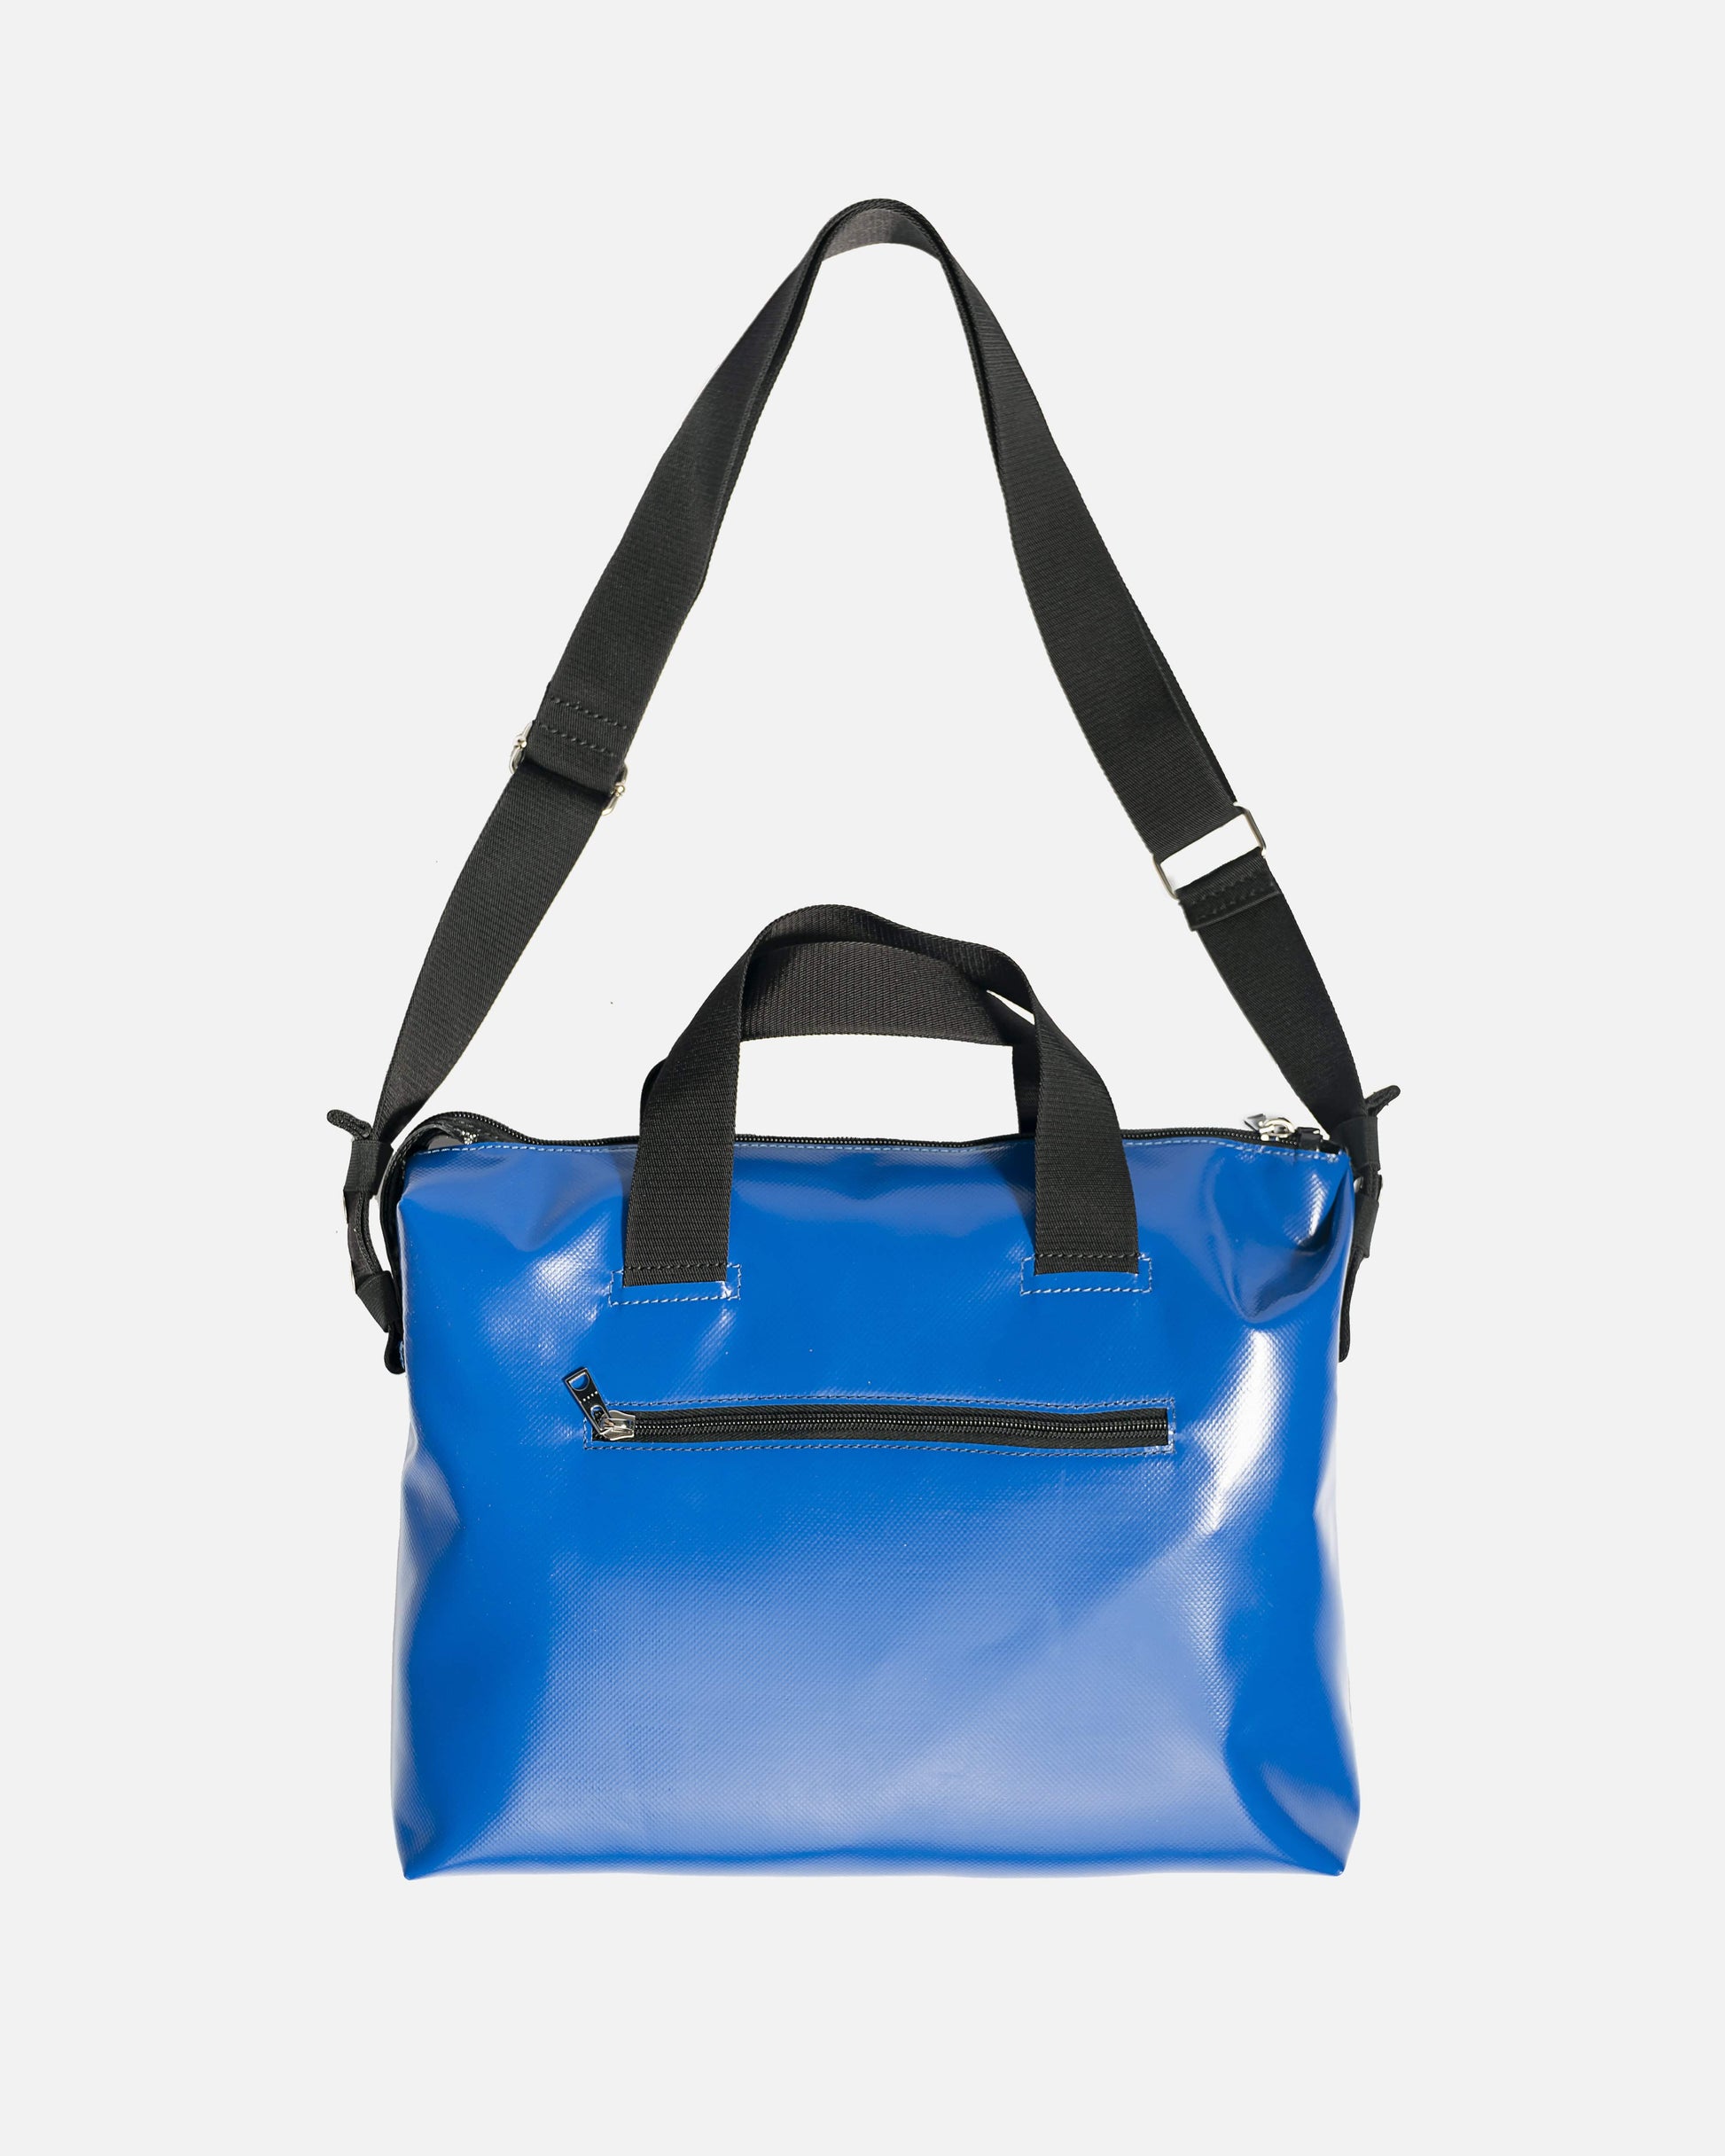 Marni Men's Bags PVC Tribeca Bag in Black/Blue